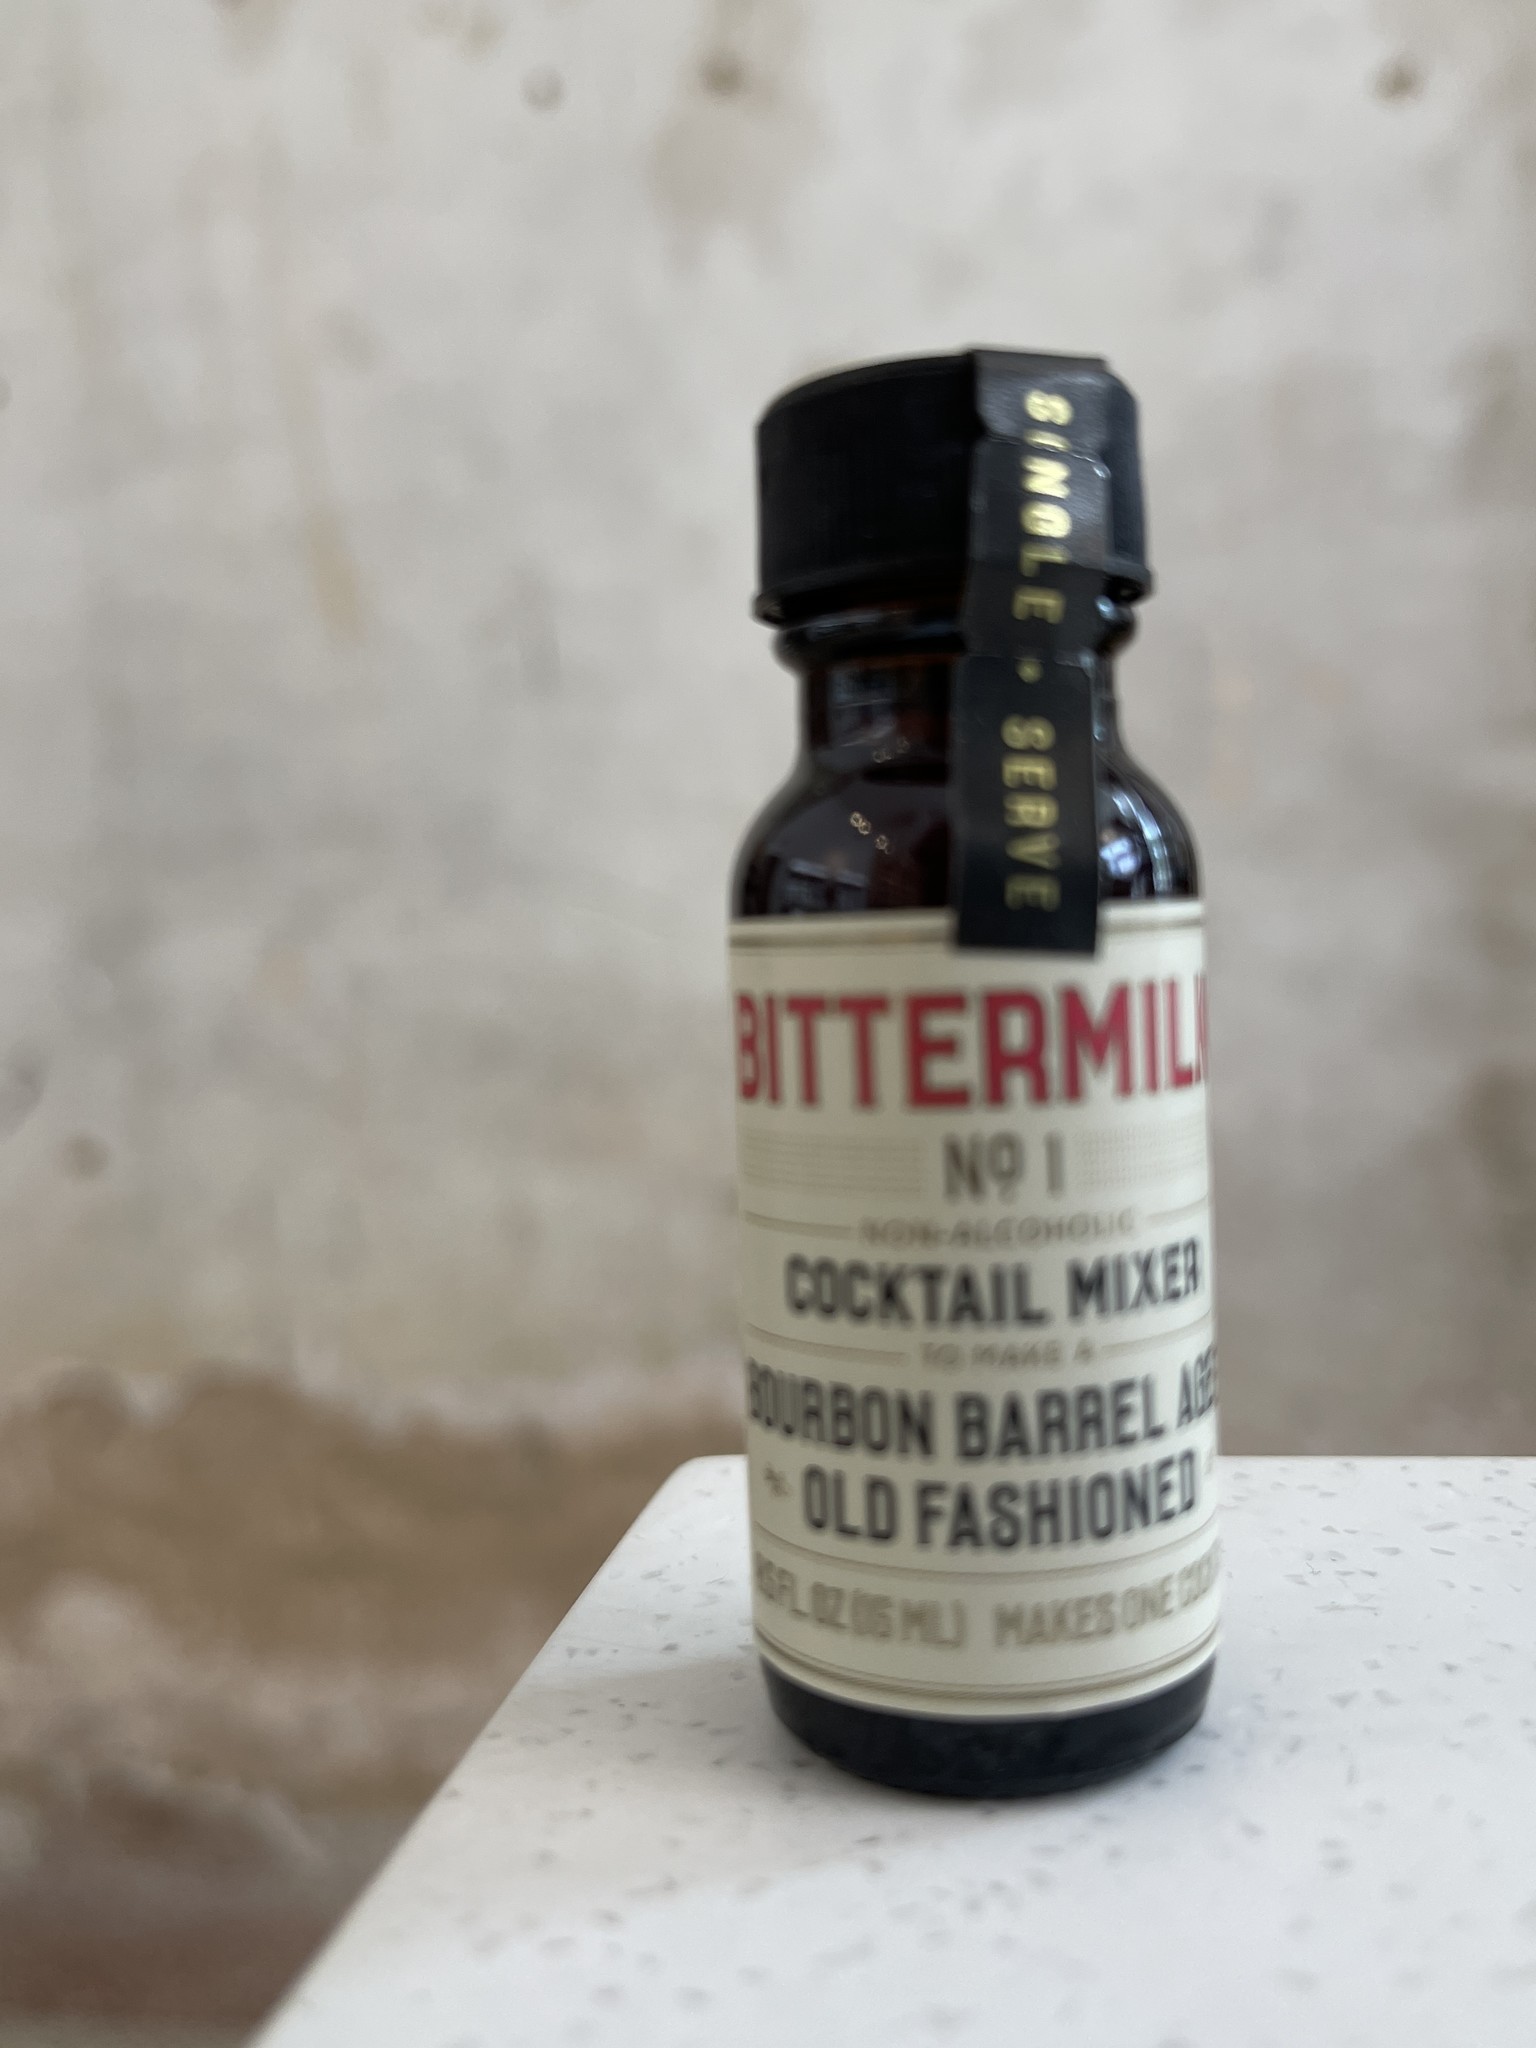 Bittermilk Bittermilk Single Serve Old Fashioned Syrup